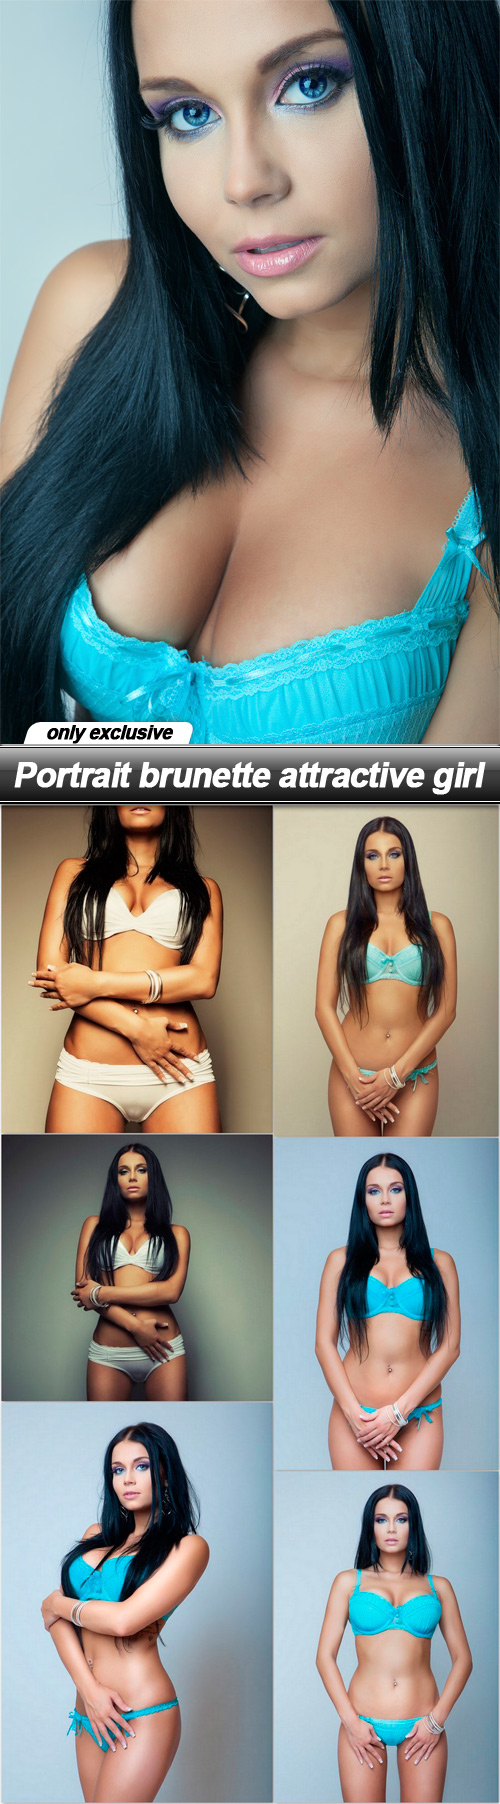 Portrait brunette attractive girl - 7 UHQ JPEG